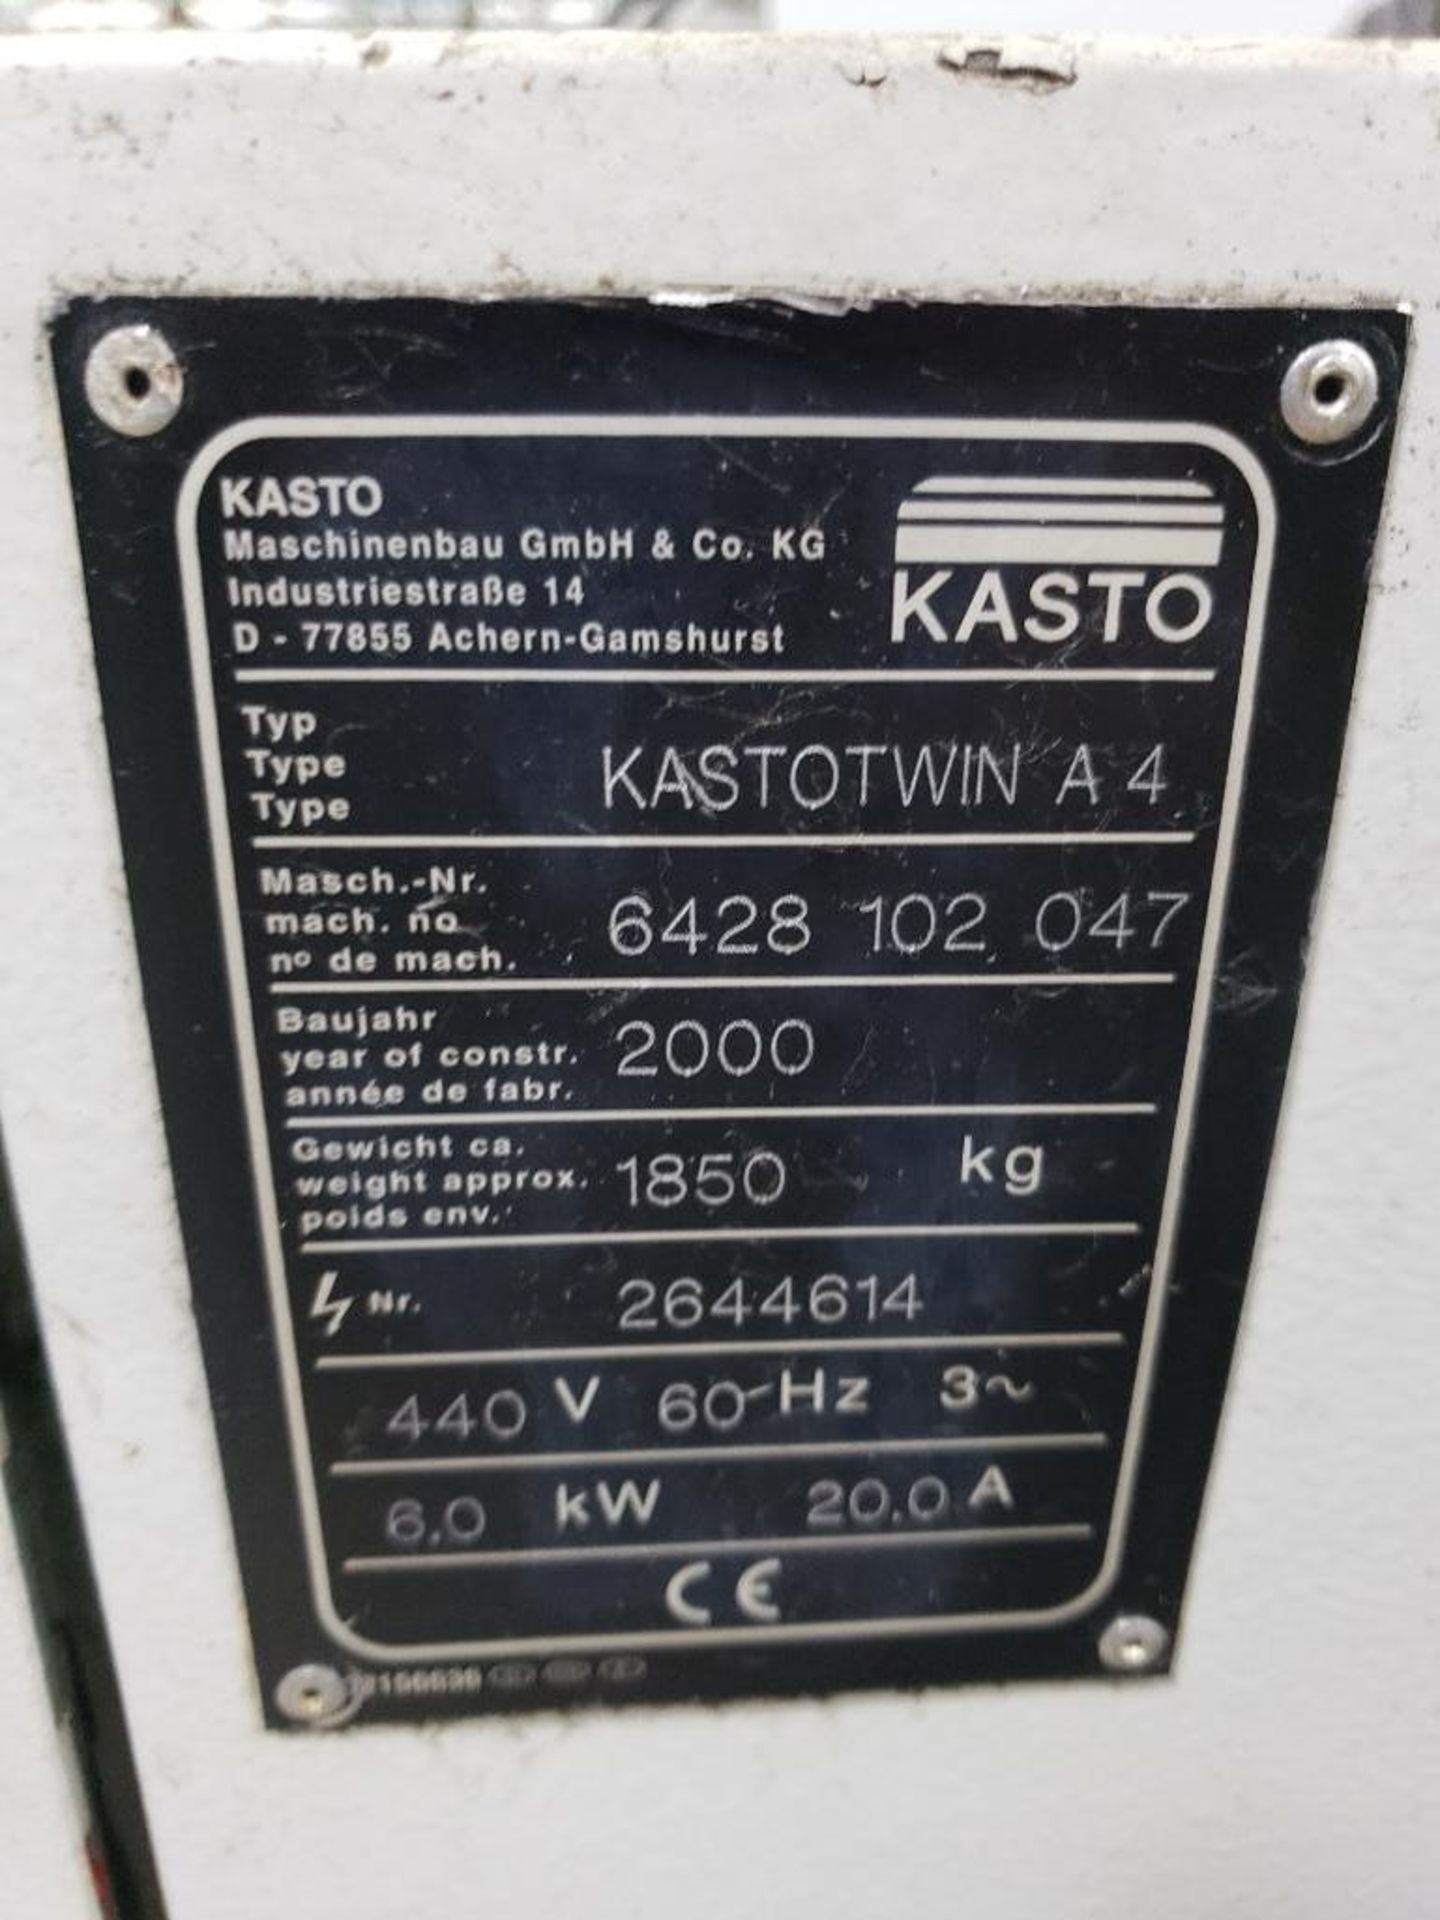 Kasto horizontal CNC band saw Model Kastotwin A4, 3 phase 440v, Mfg year 2000. Serial # 6428102047. - Bild 19 aus 32